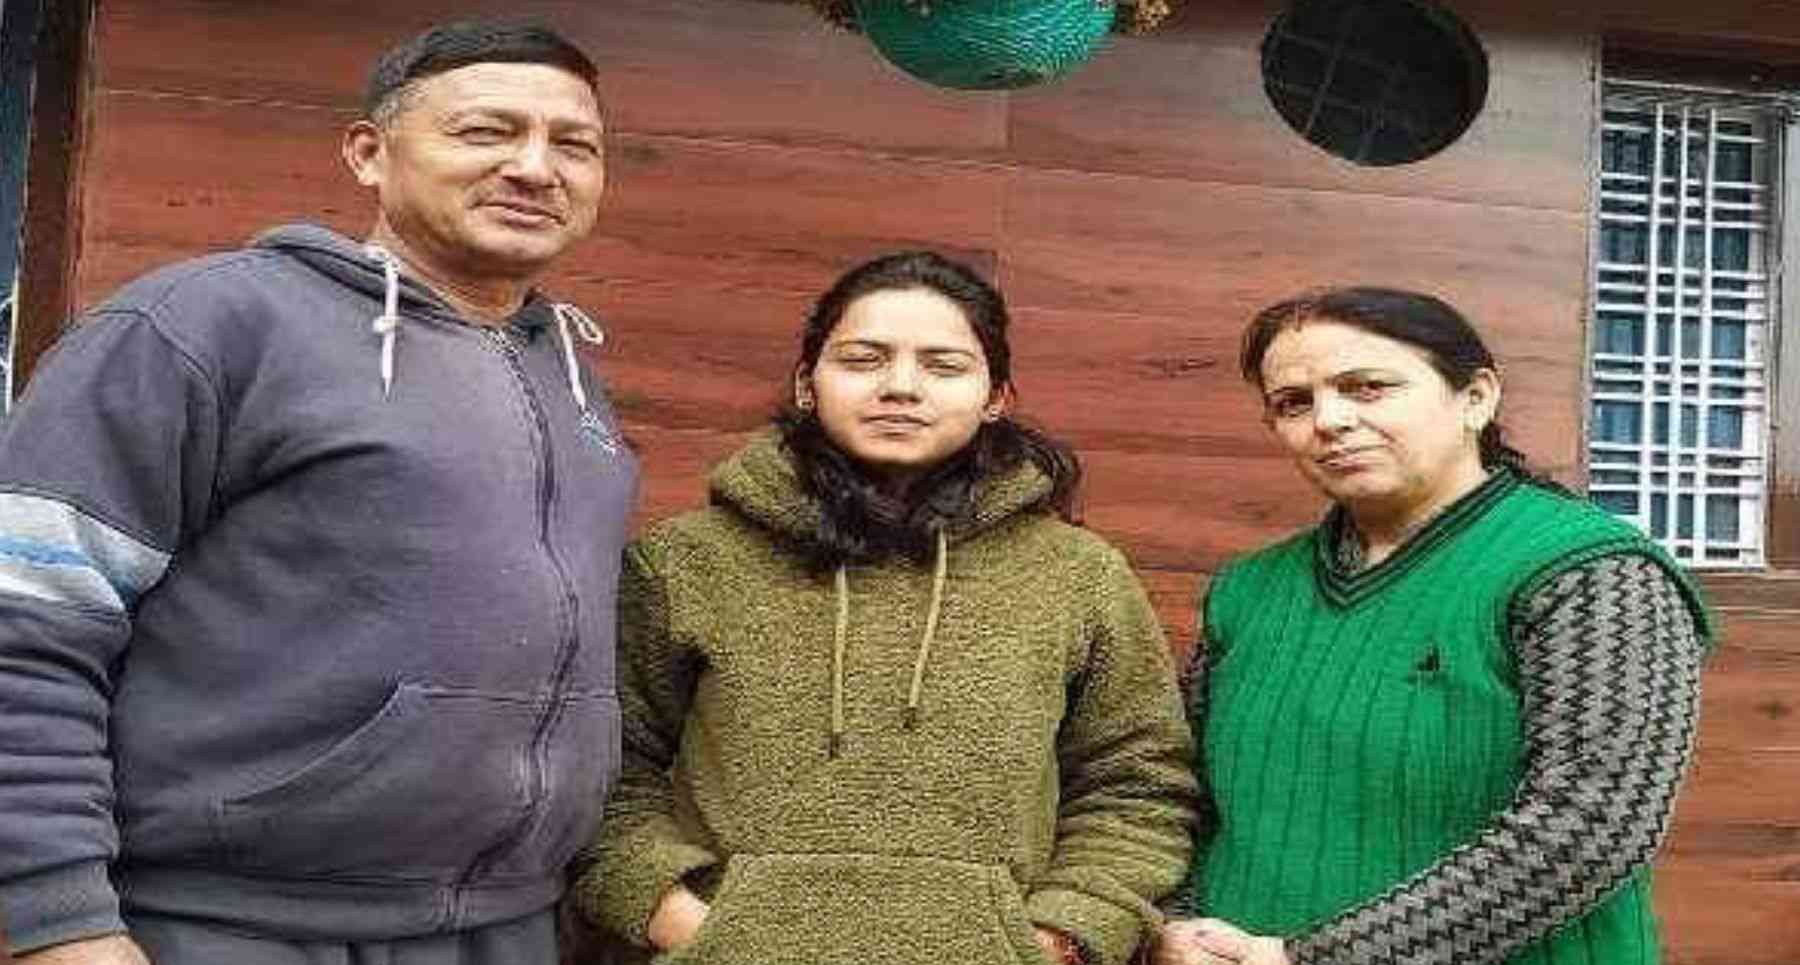 Uttarakhand news: Sonali Bisht of kotdwar pauri garhwal became a flying officer in Indian Air Force. Sonali Bisht Flying officer